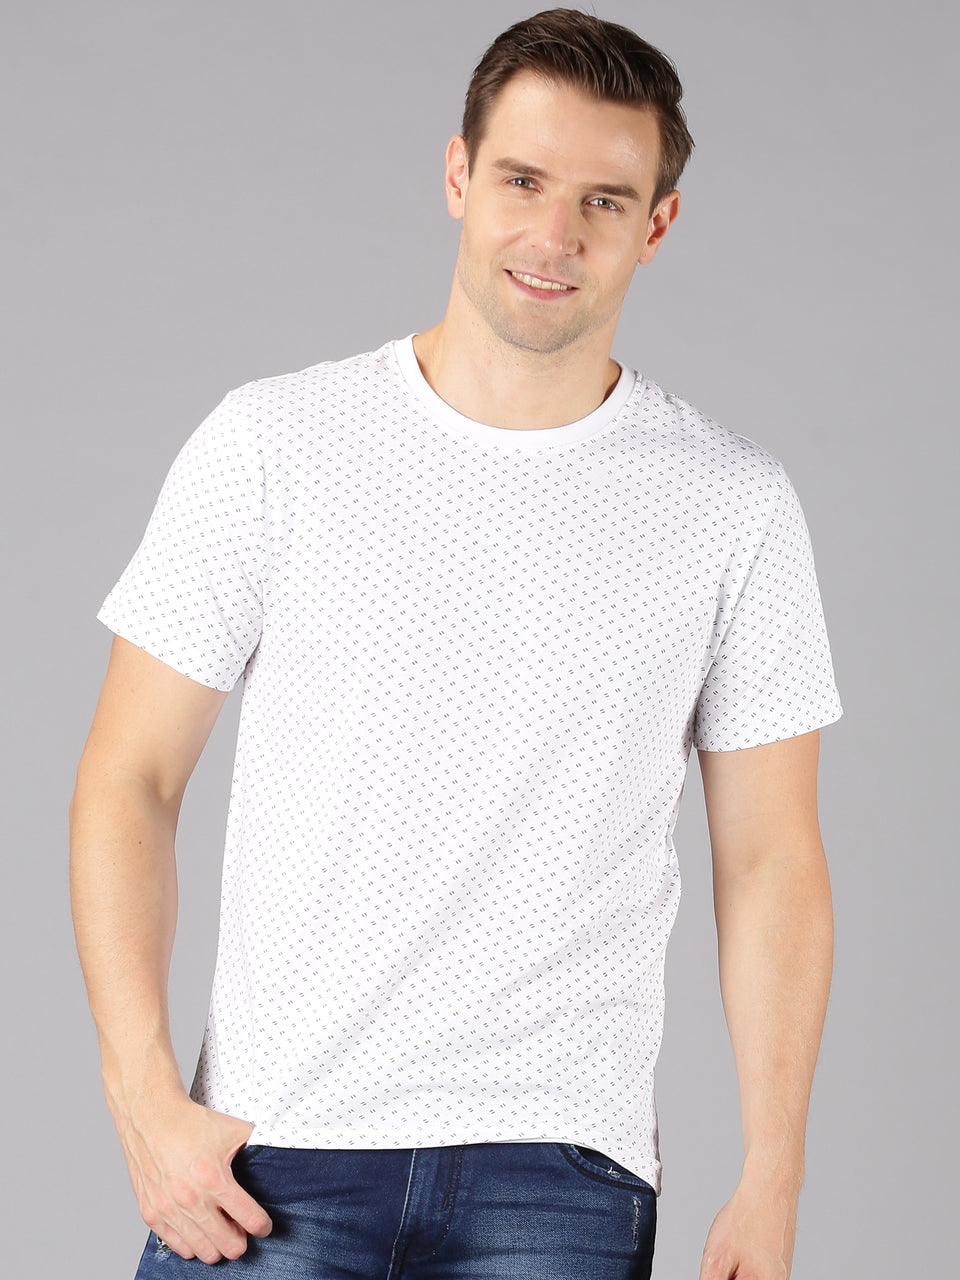 Buy Pure Cotton White Half Sleeve Shirt for Men Online